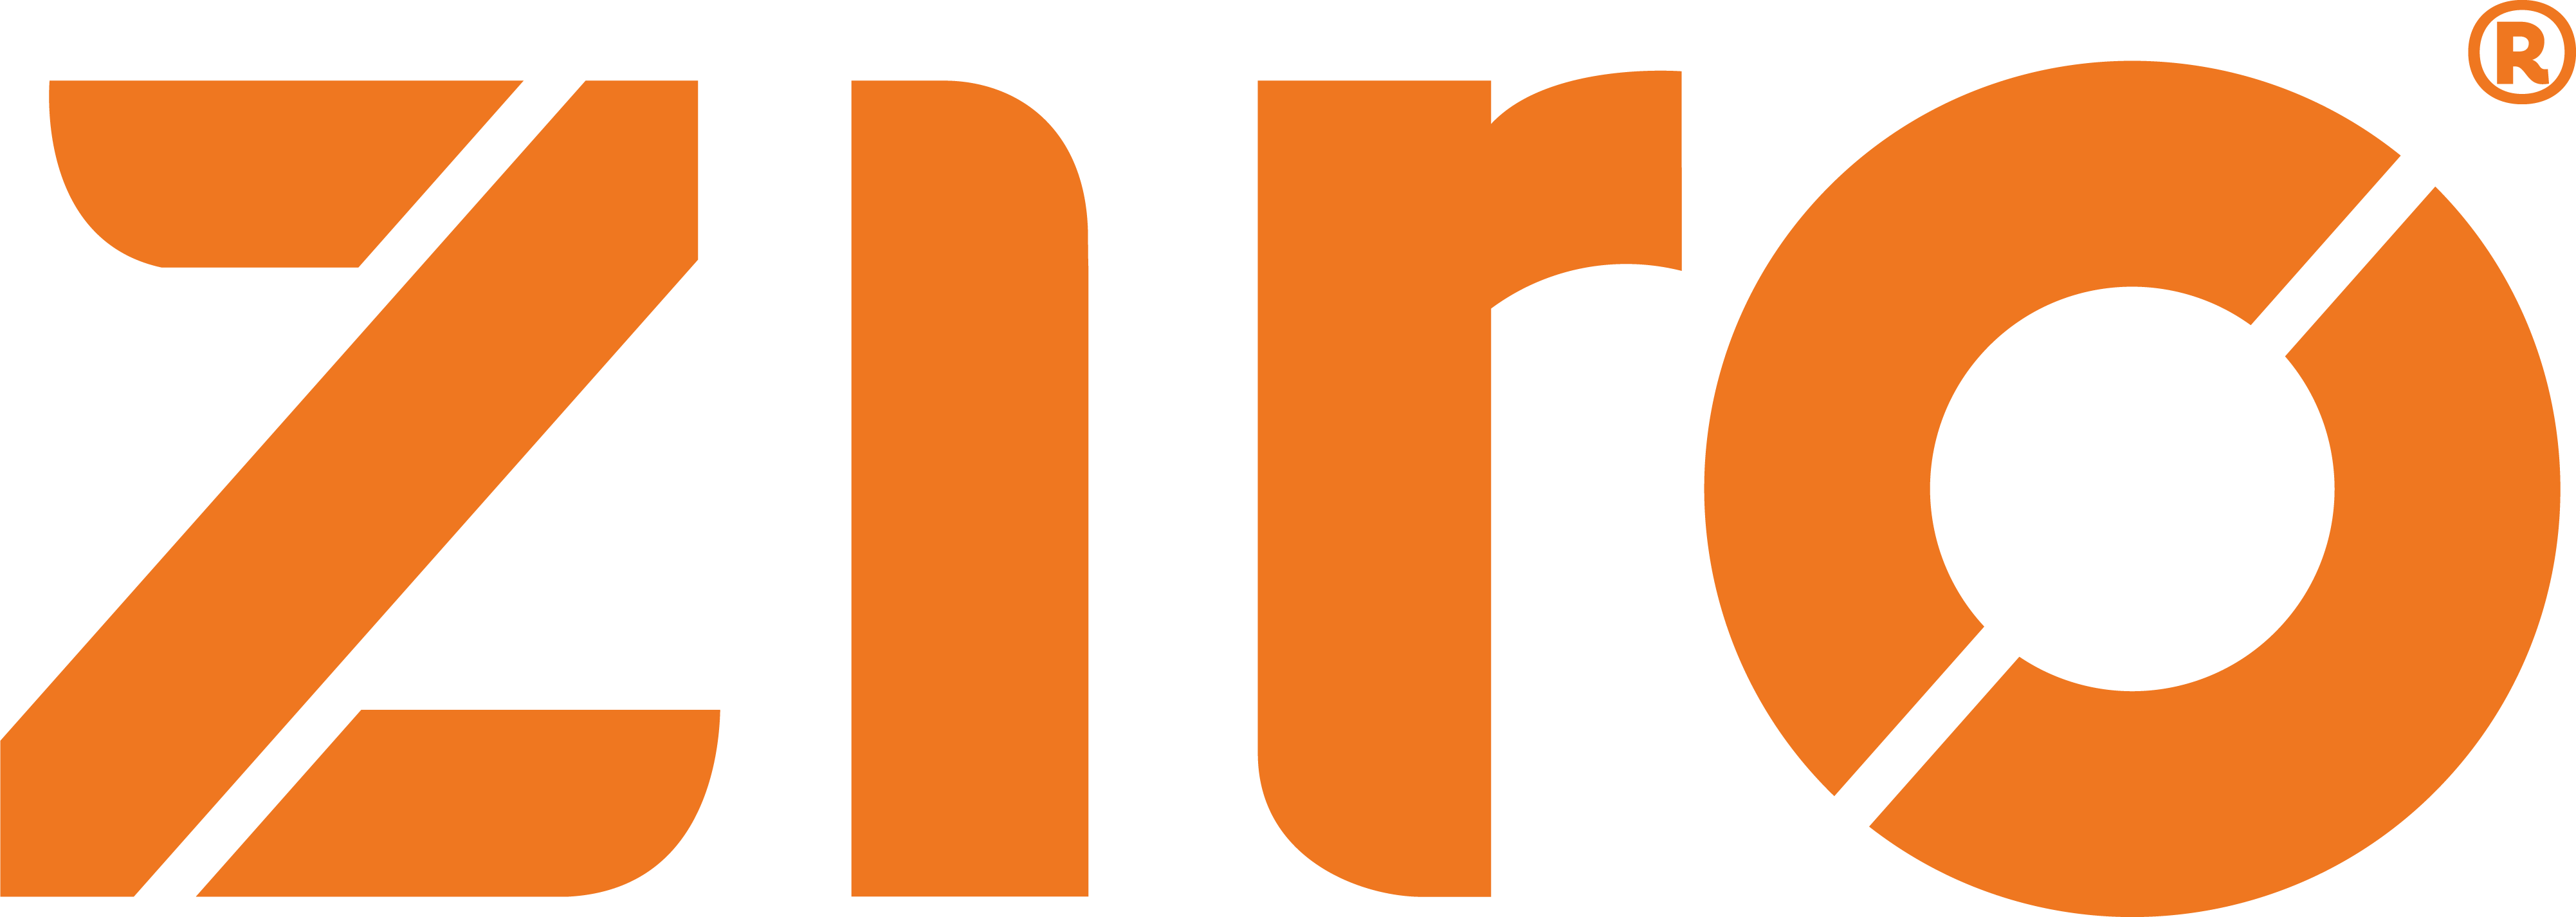 ziro_logo_orange